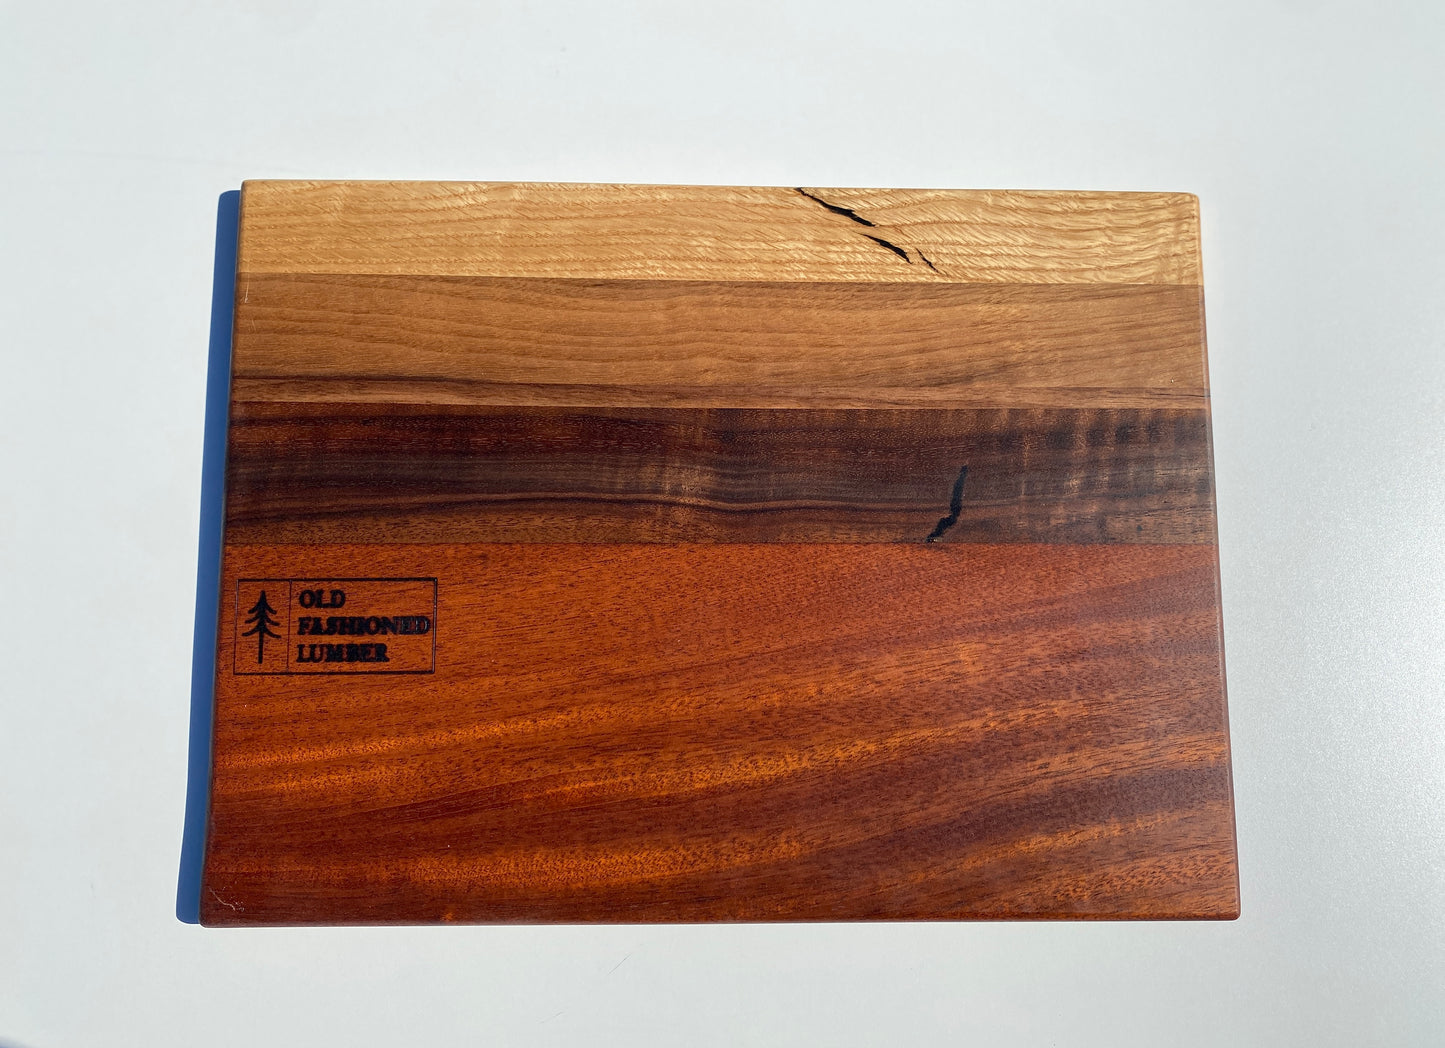 Mahogany cutting board